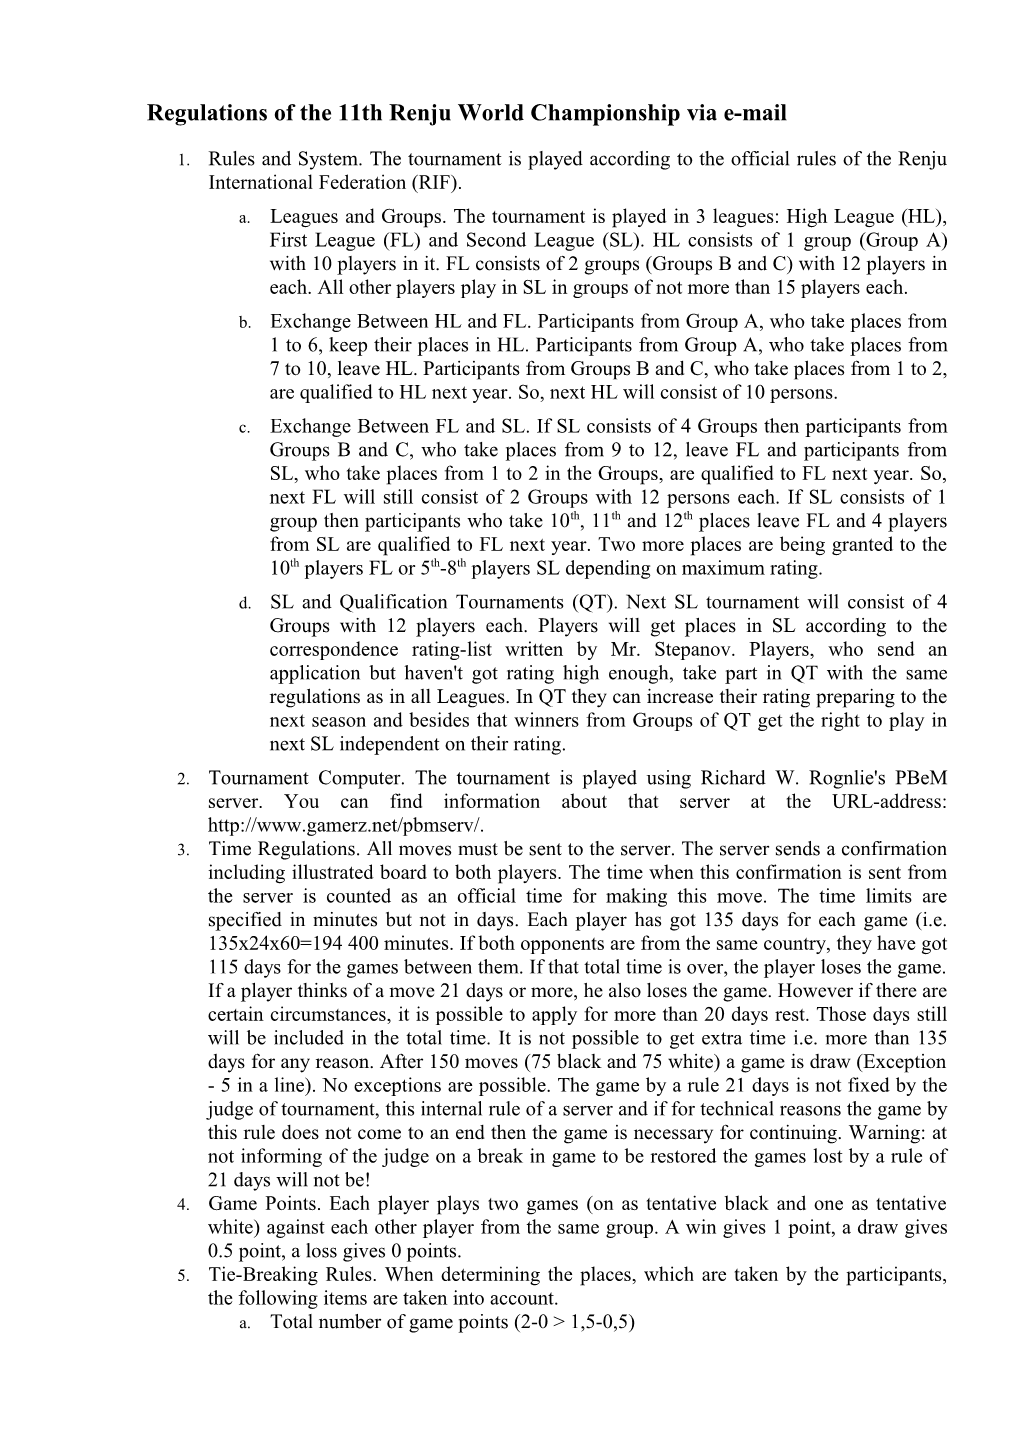 Regulations of the 11Th Renju World Championship Via E-Mail